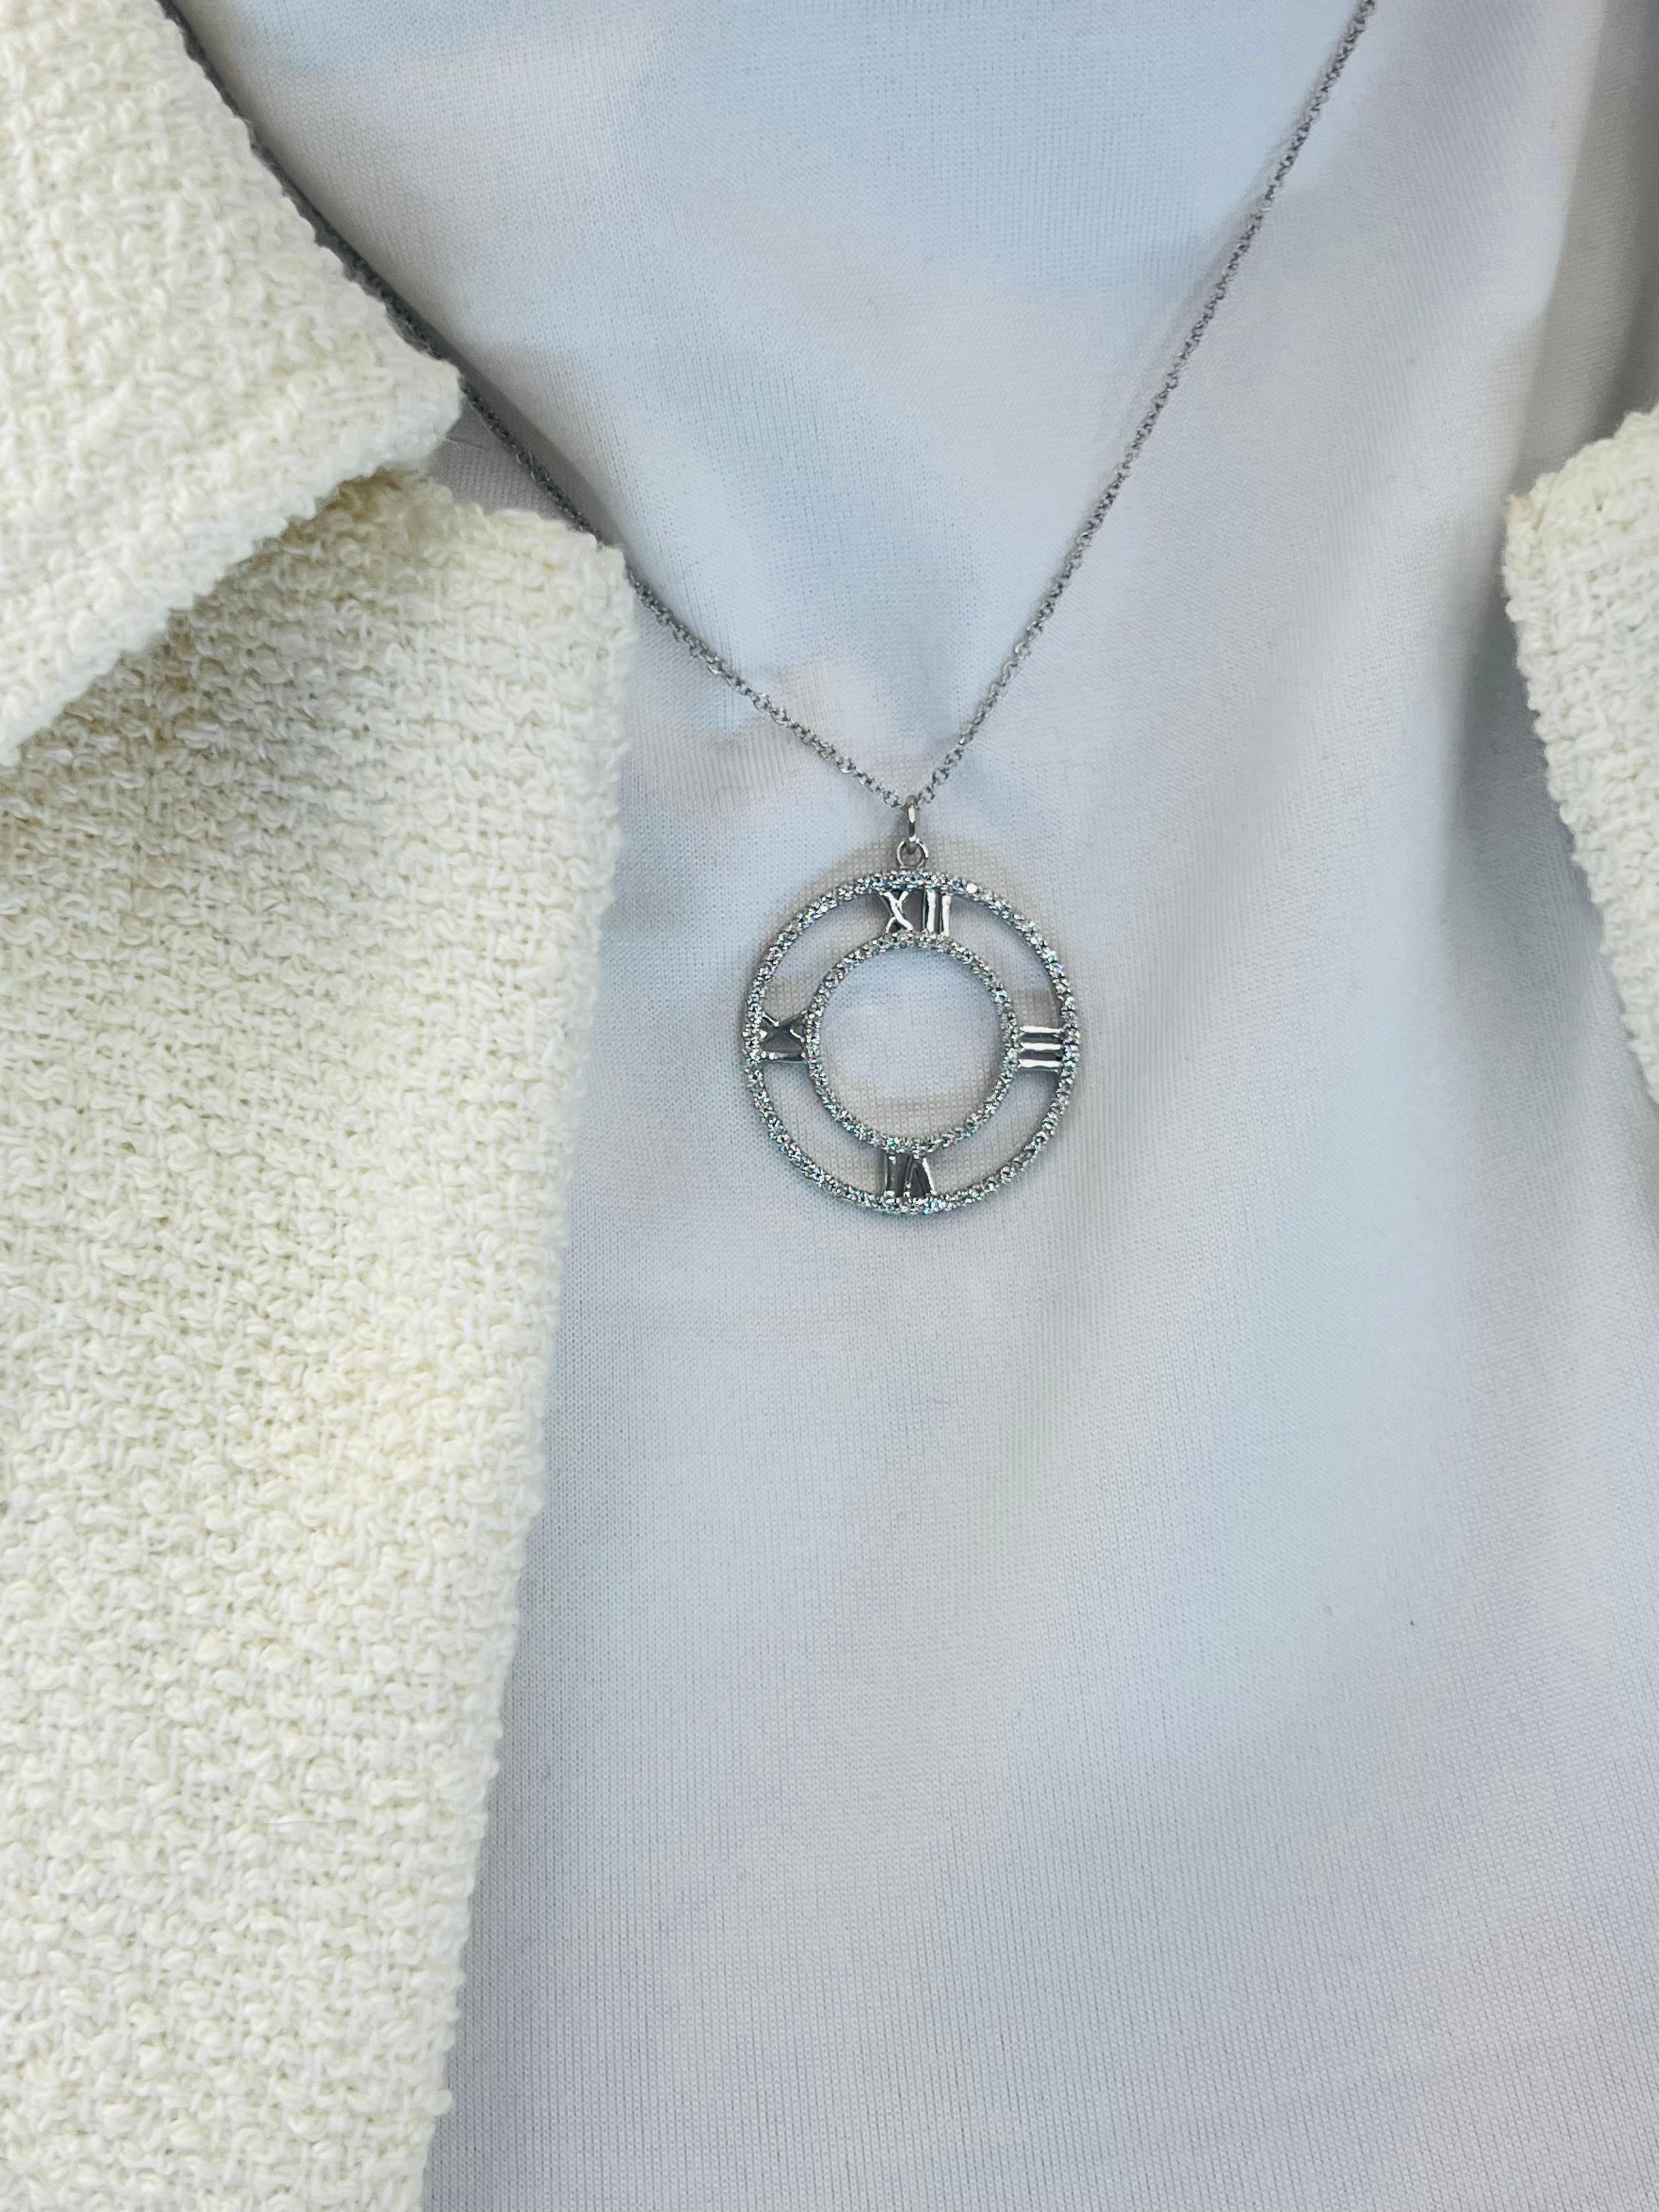 Round Cut Tiffany & Co. Atlas Diamond Open Medallion Pendant Necklace 18K White Gold Large For Sale